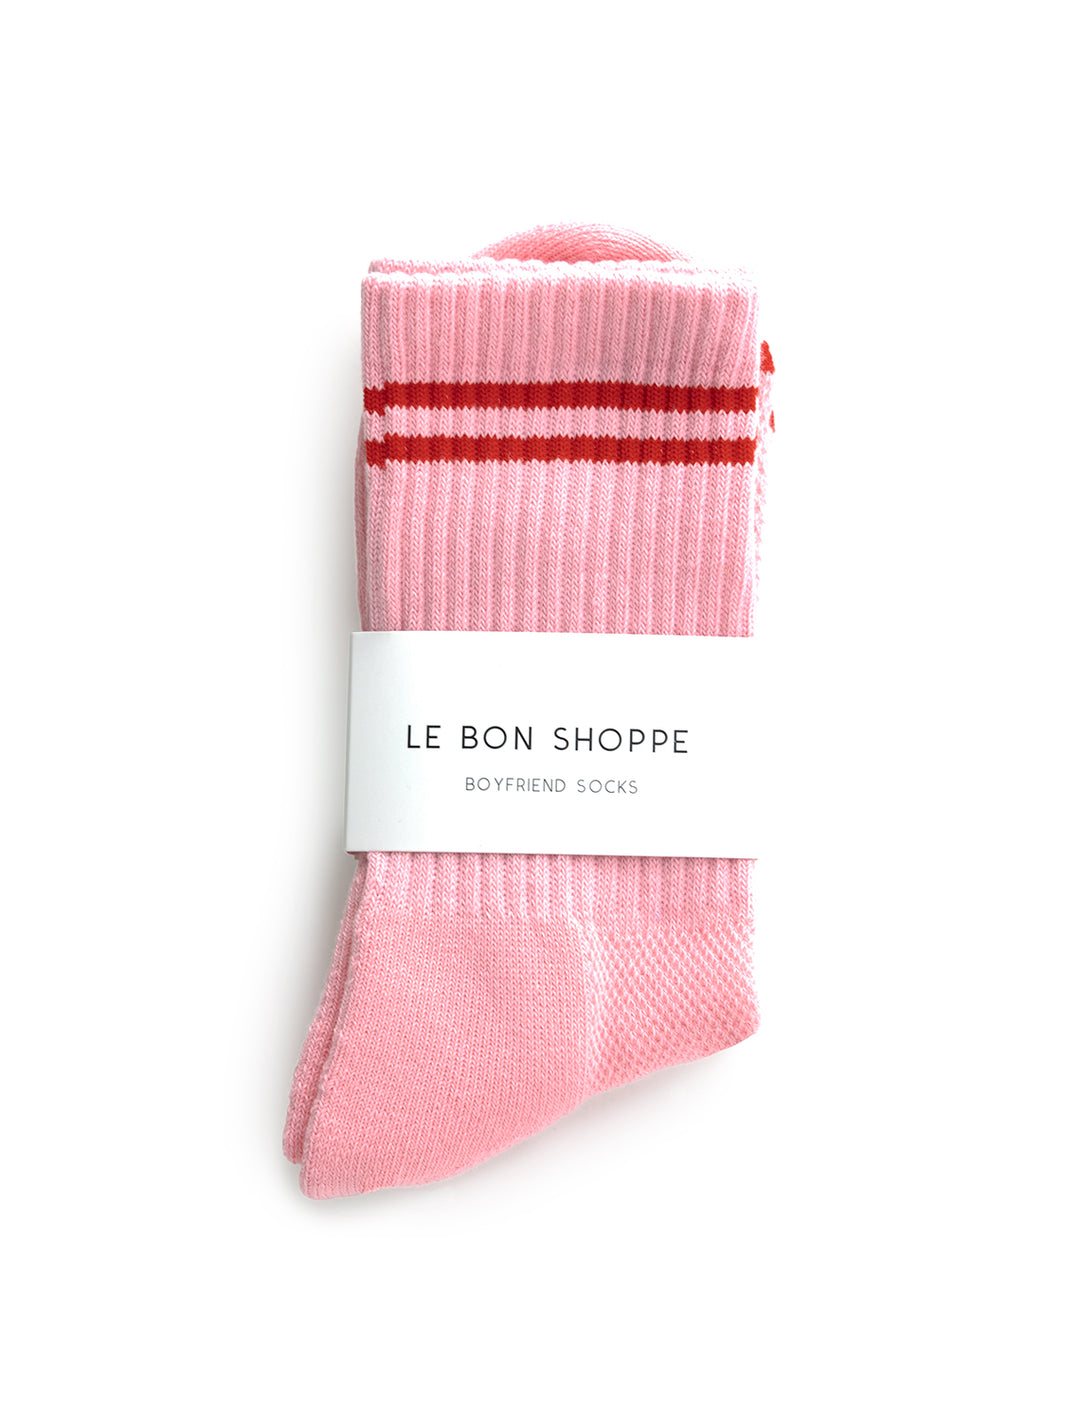 Front view of Le Bon Shoppe's boyfriend socks in amour pink.